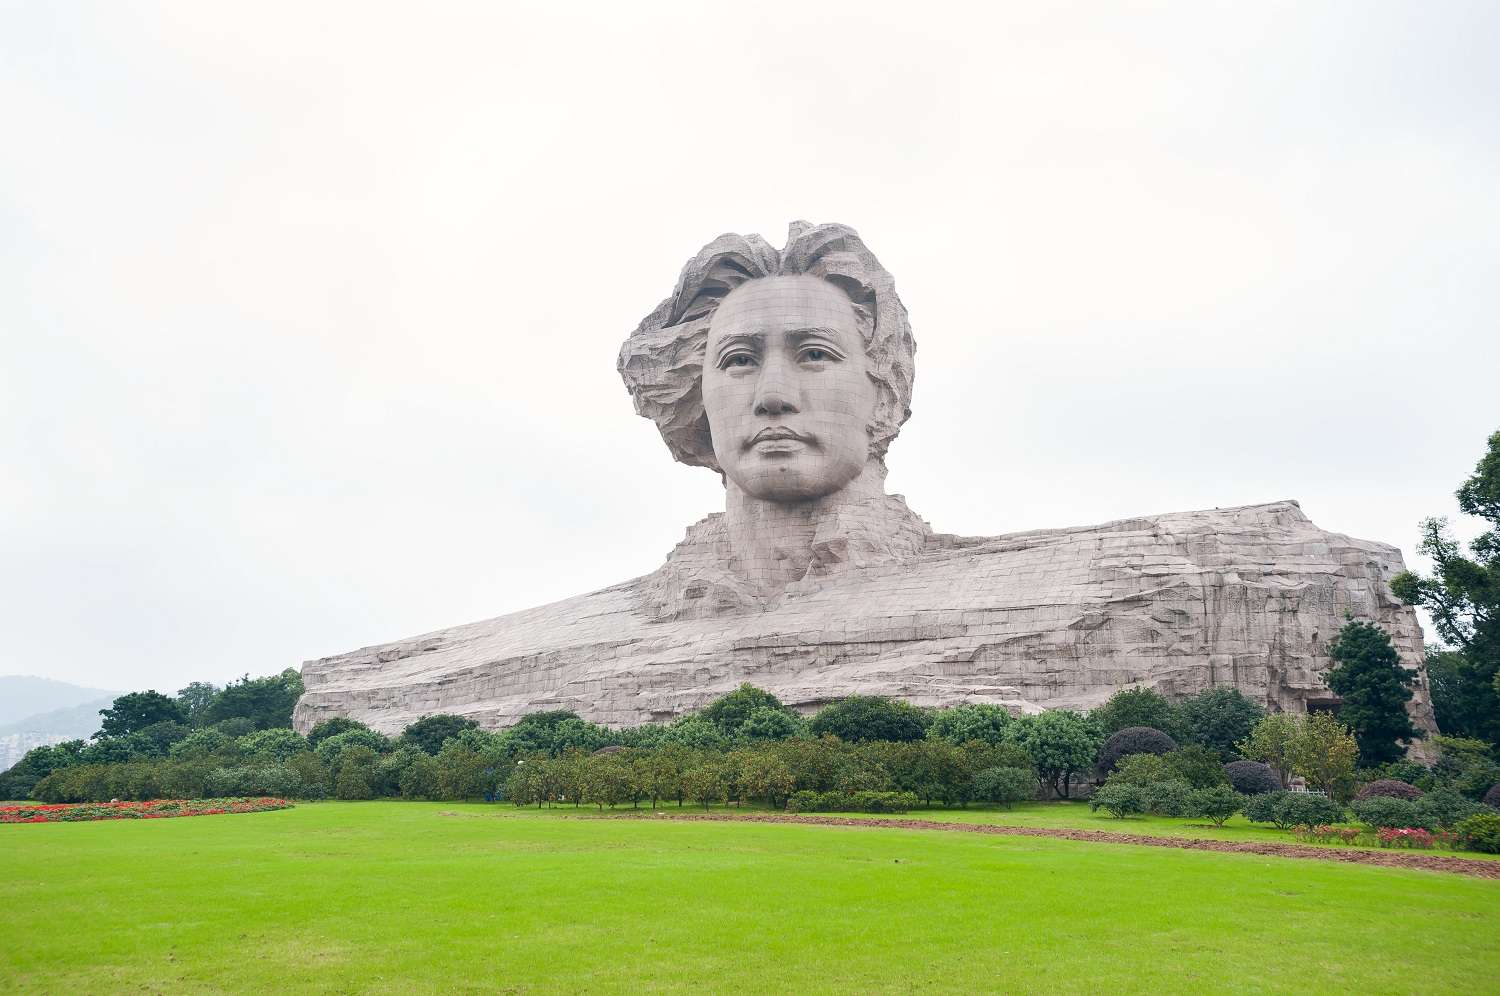 Каменная статуя председателя Мао в Чанше, провинция Хунань, Китай.